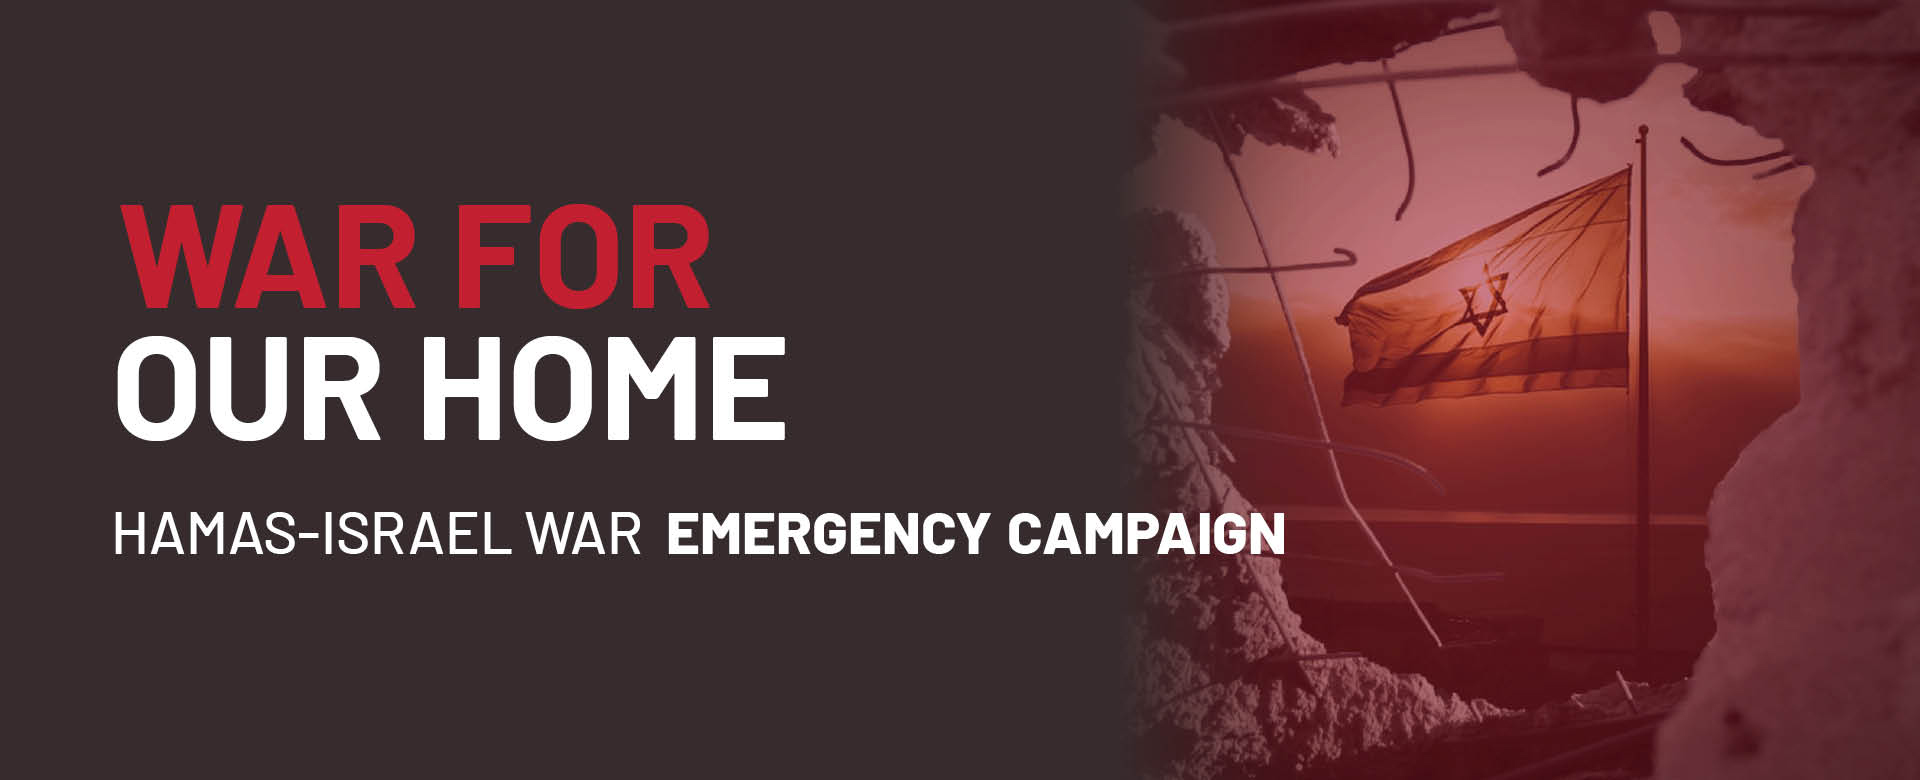 hamas israel war emergency campaign